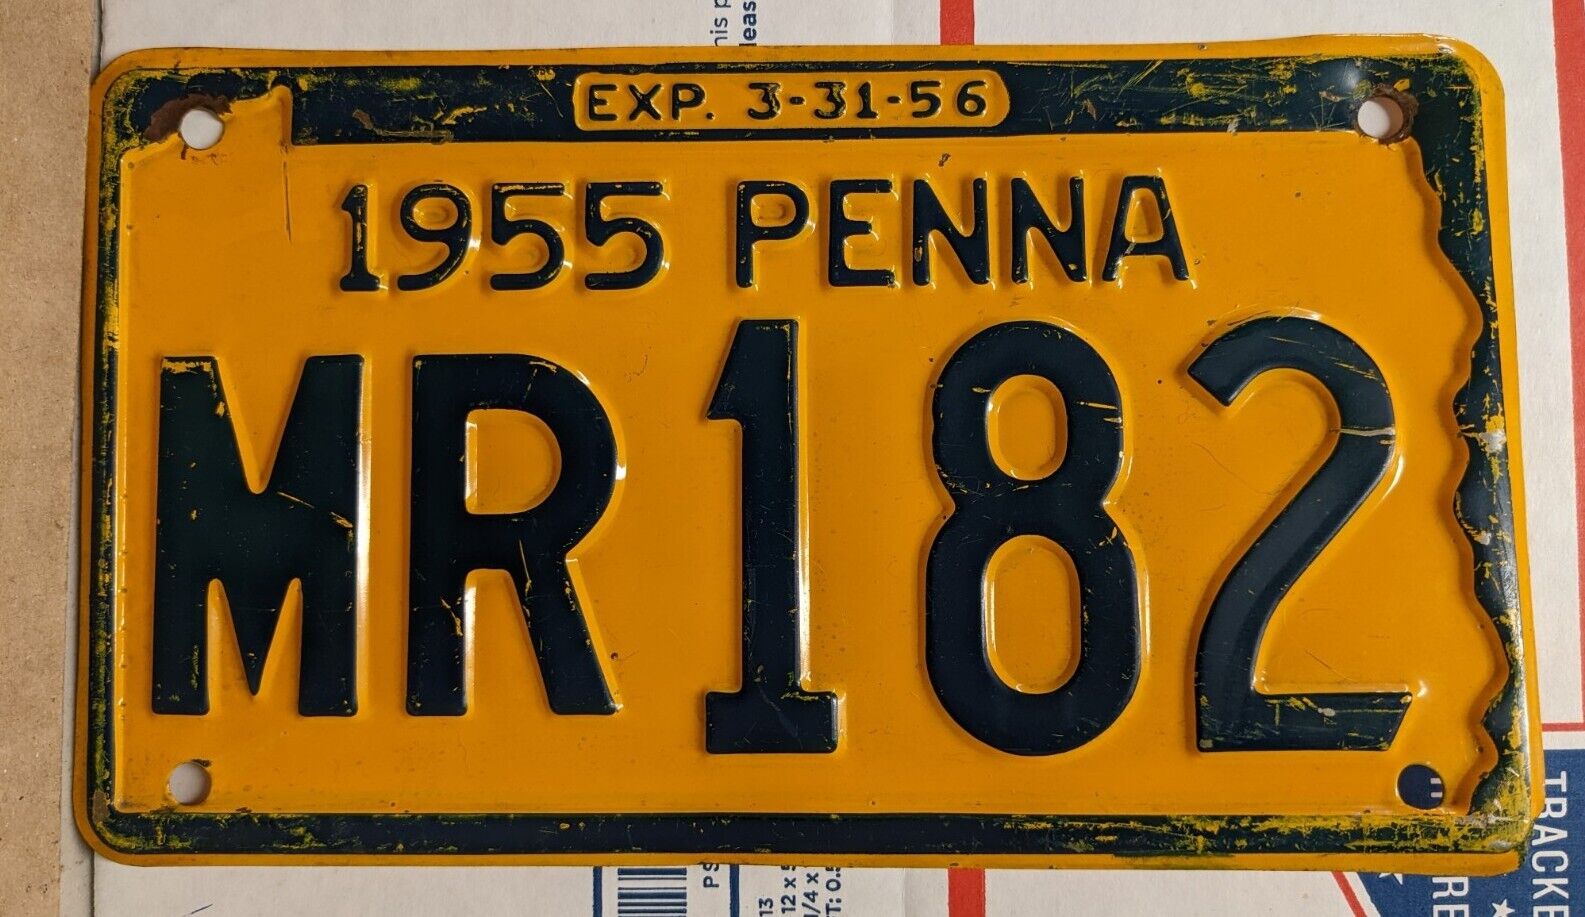 1955 Pennsylvania License Plate Orange Black Mr 182